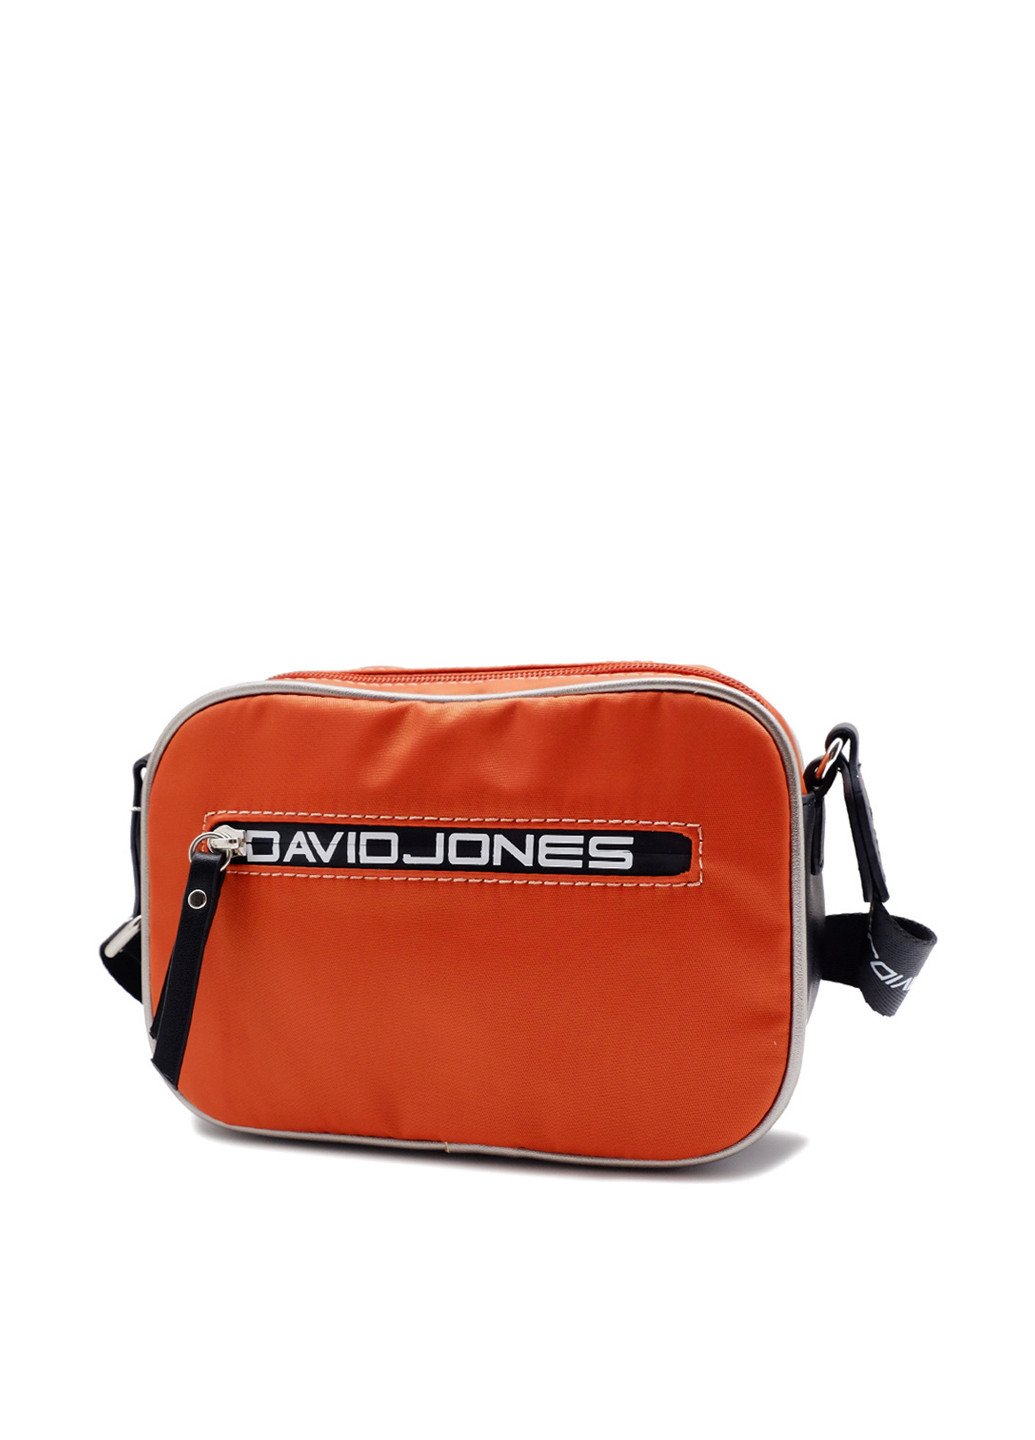 Сумка David Jones мессенджер логотип оранжевая кэжуал